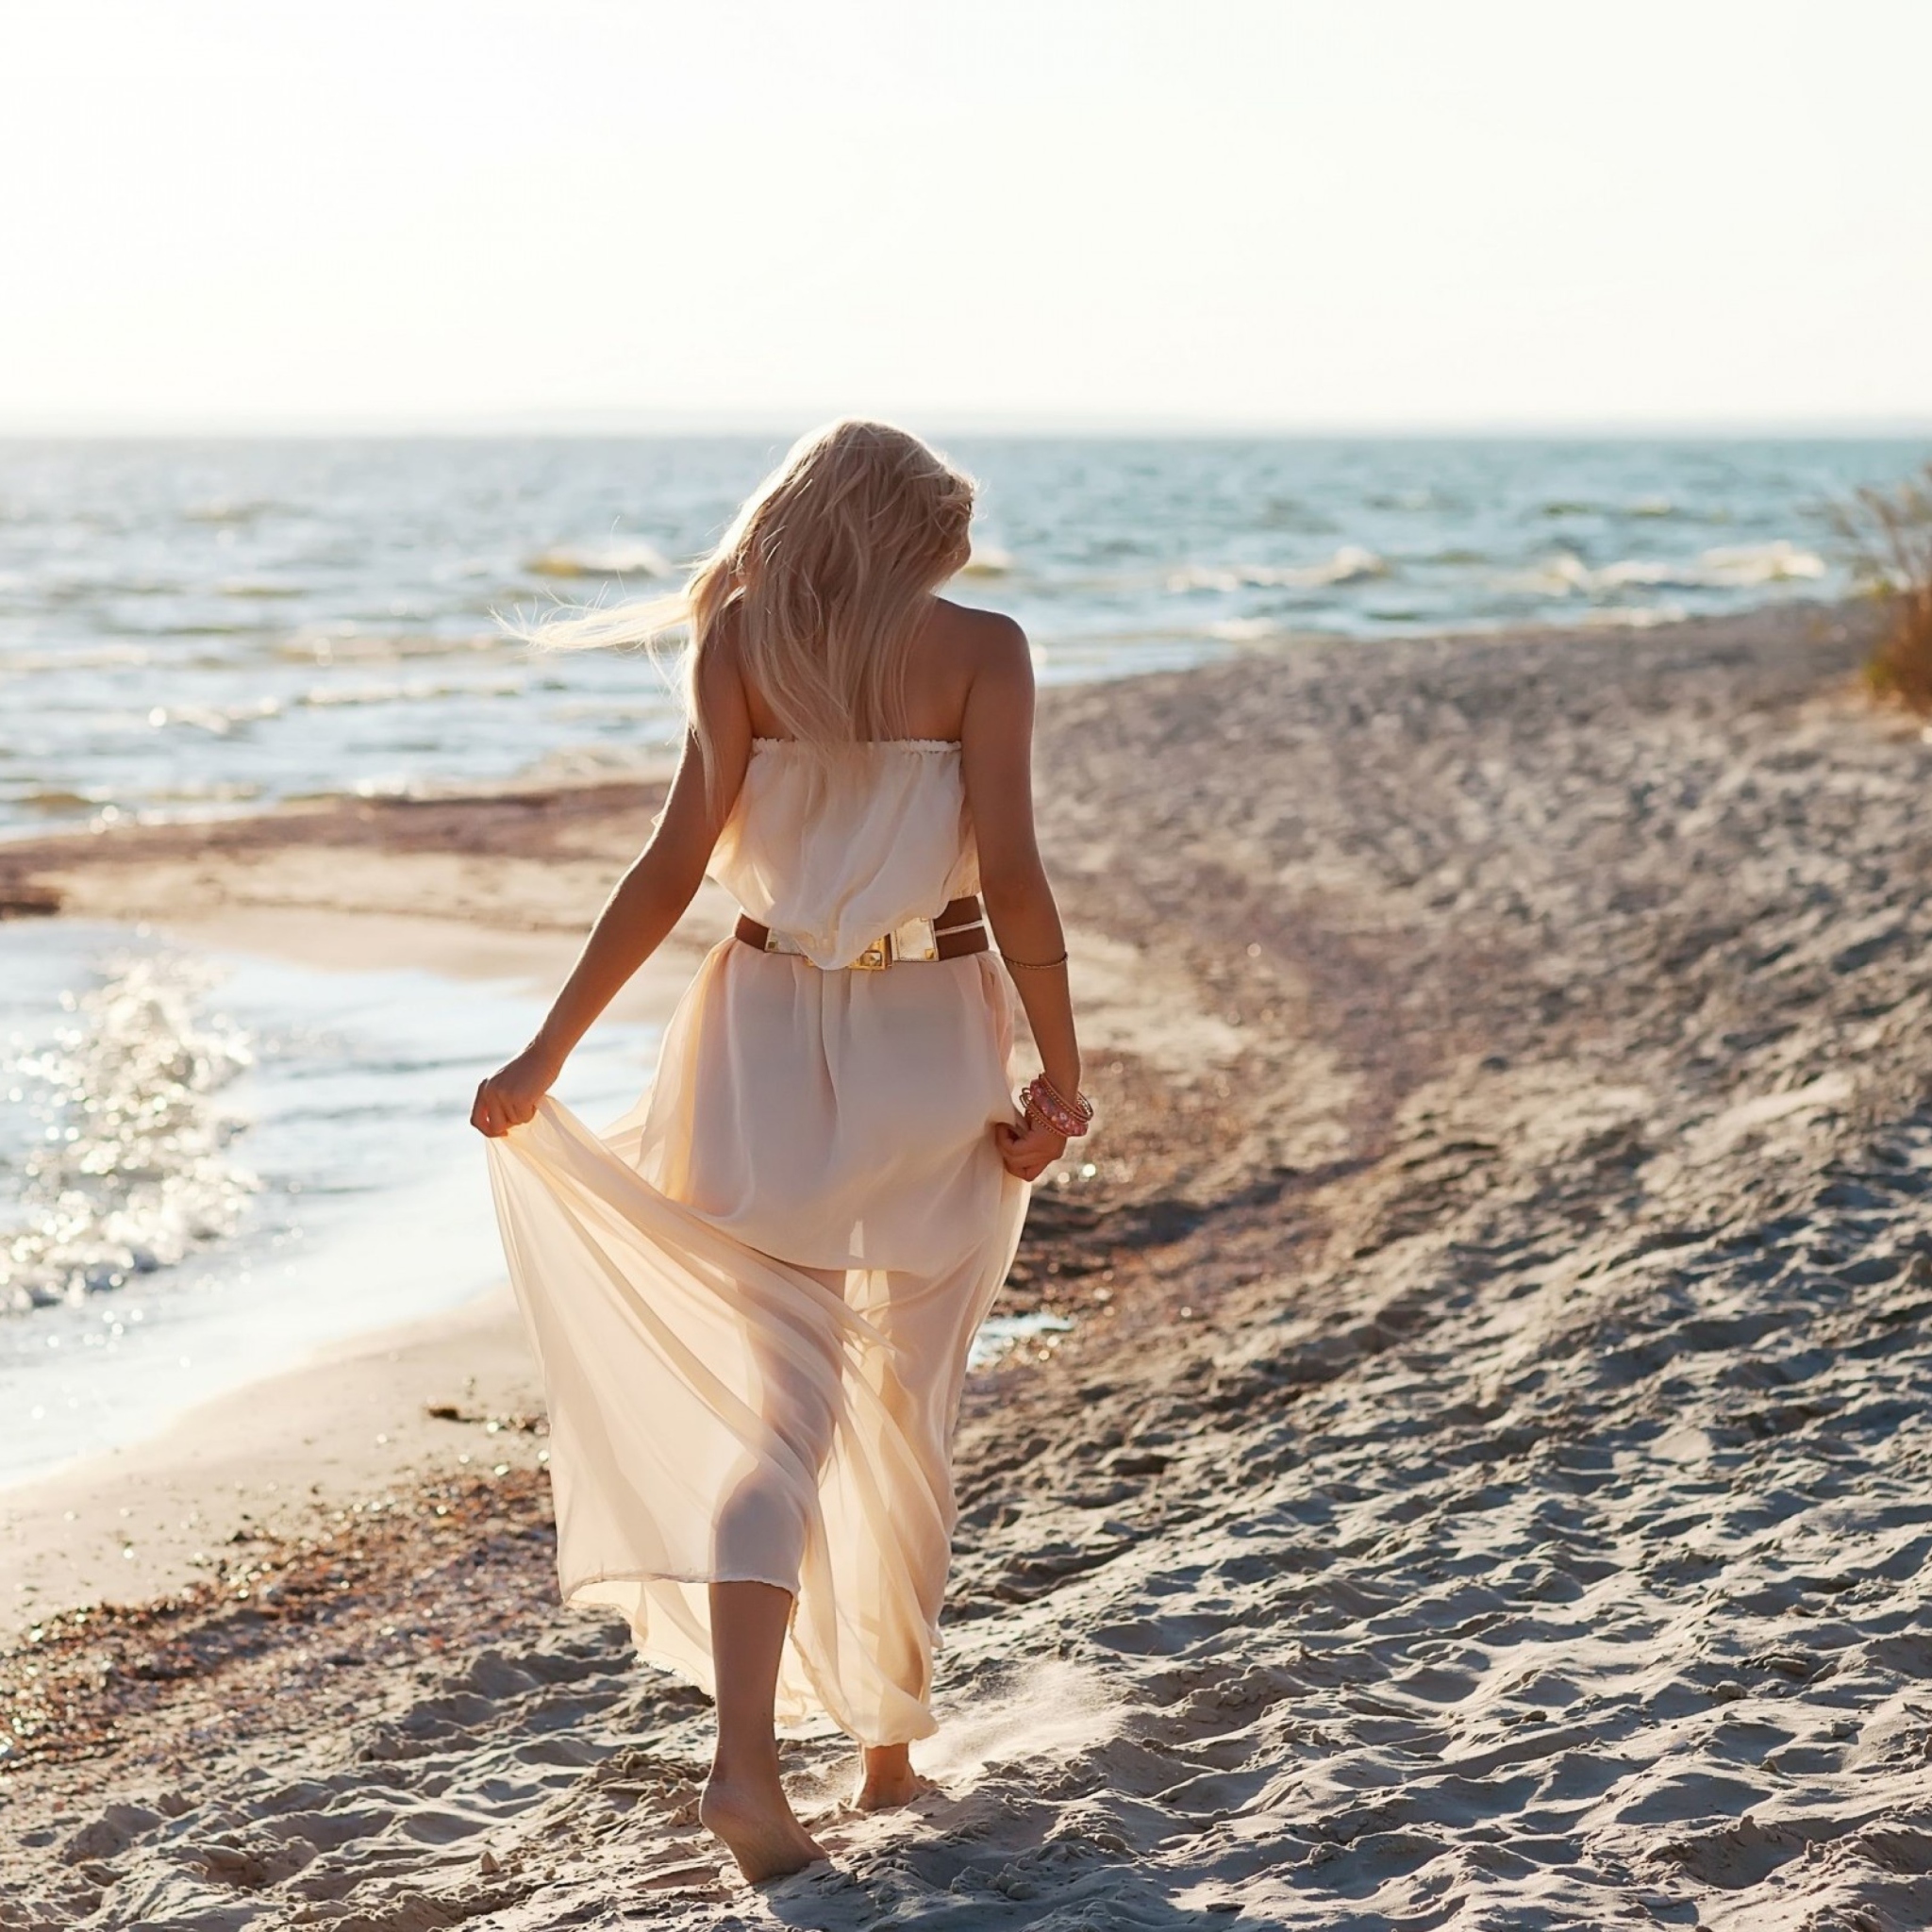 Das Girl In White Dress On Beach Wallpaper 2048x2048